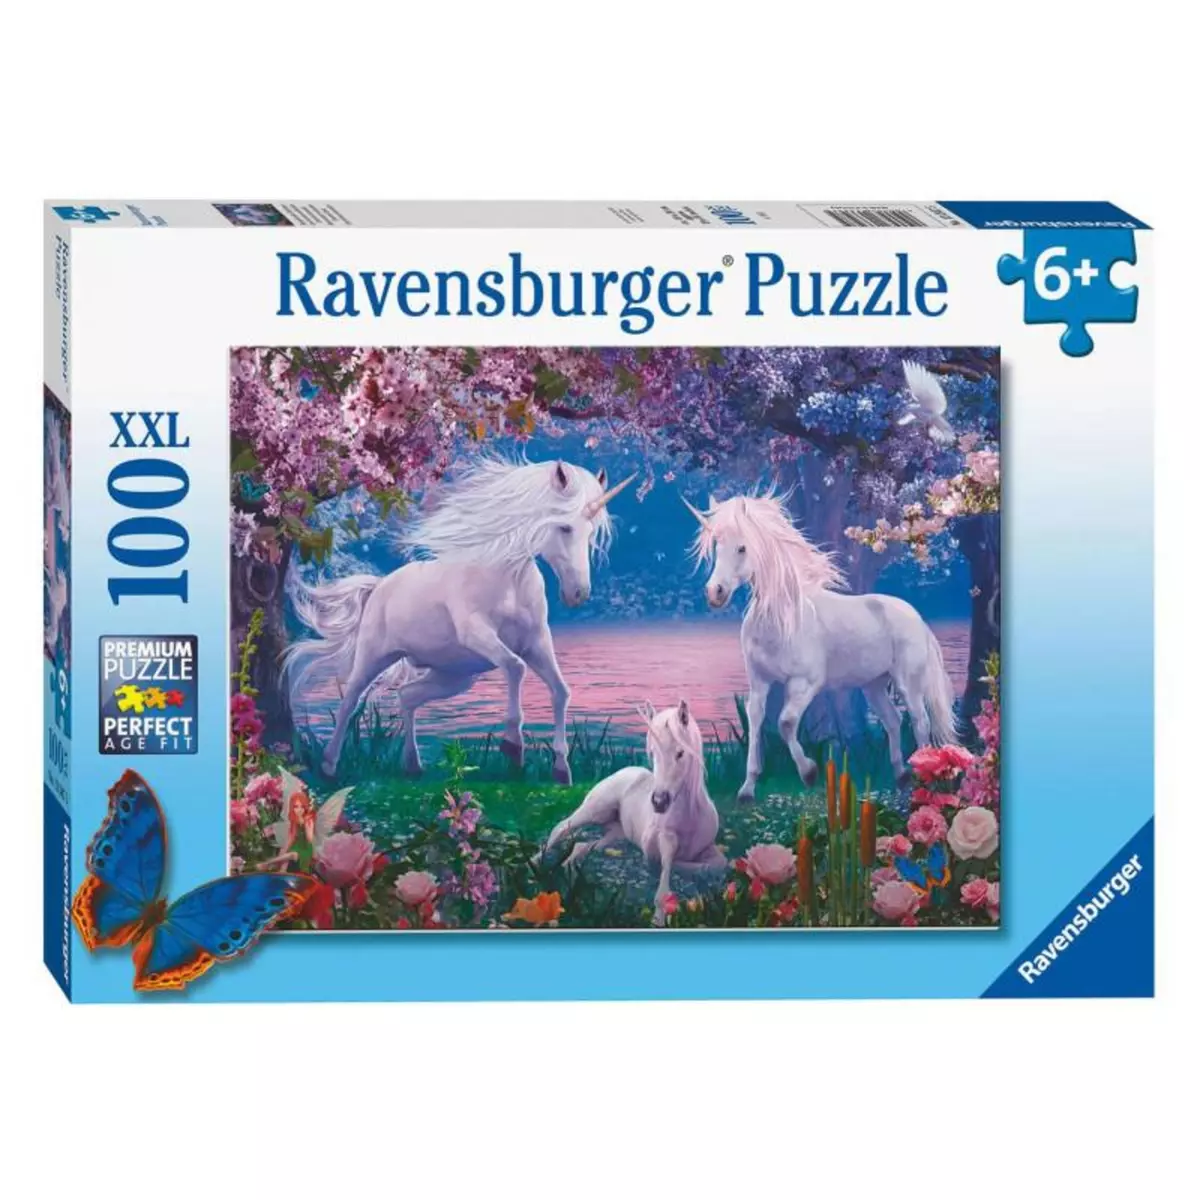 RAVENSBURGER Ravensburger Puzzle Enchanted Unicorns, 100pcs. XXL 133475